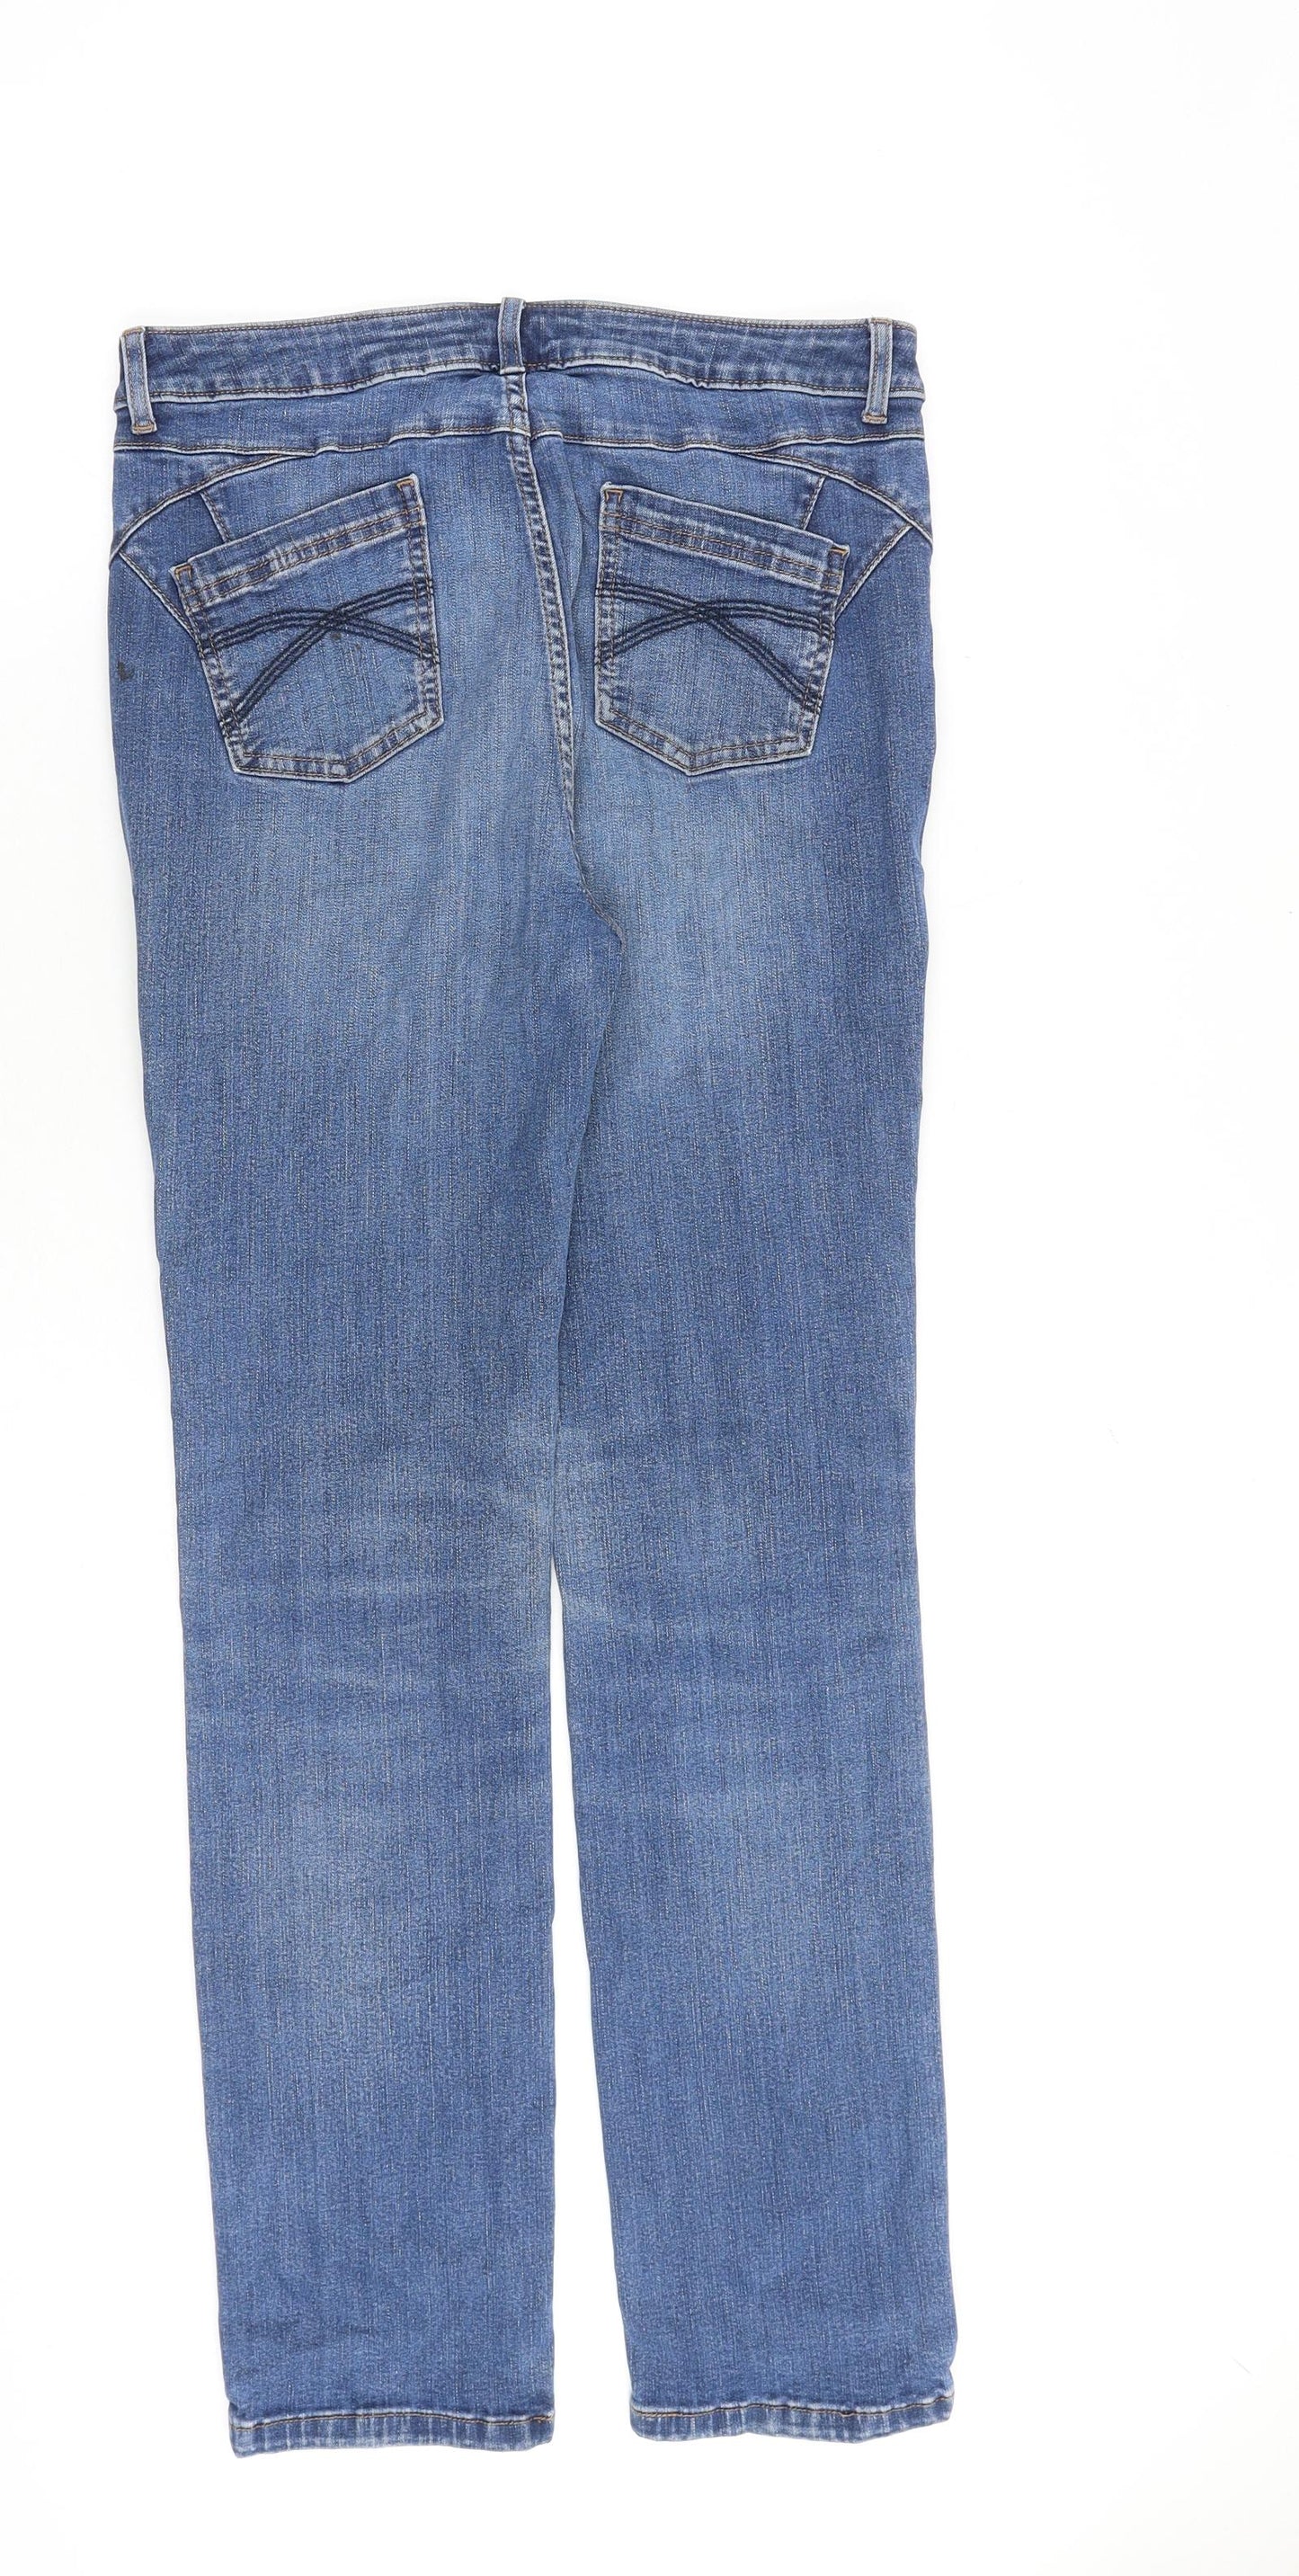 Per Una Womens Blue Cotton Skinny Jeans Size 12 L30 in Slim Zip